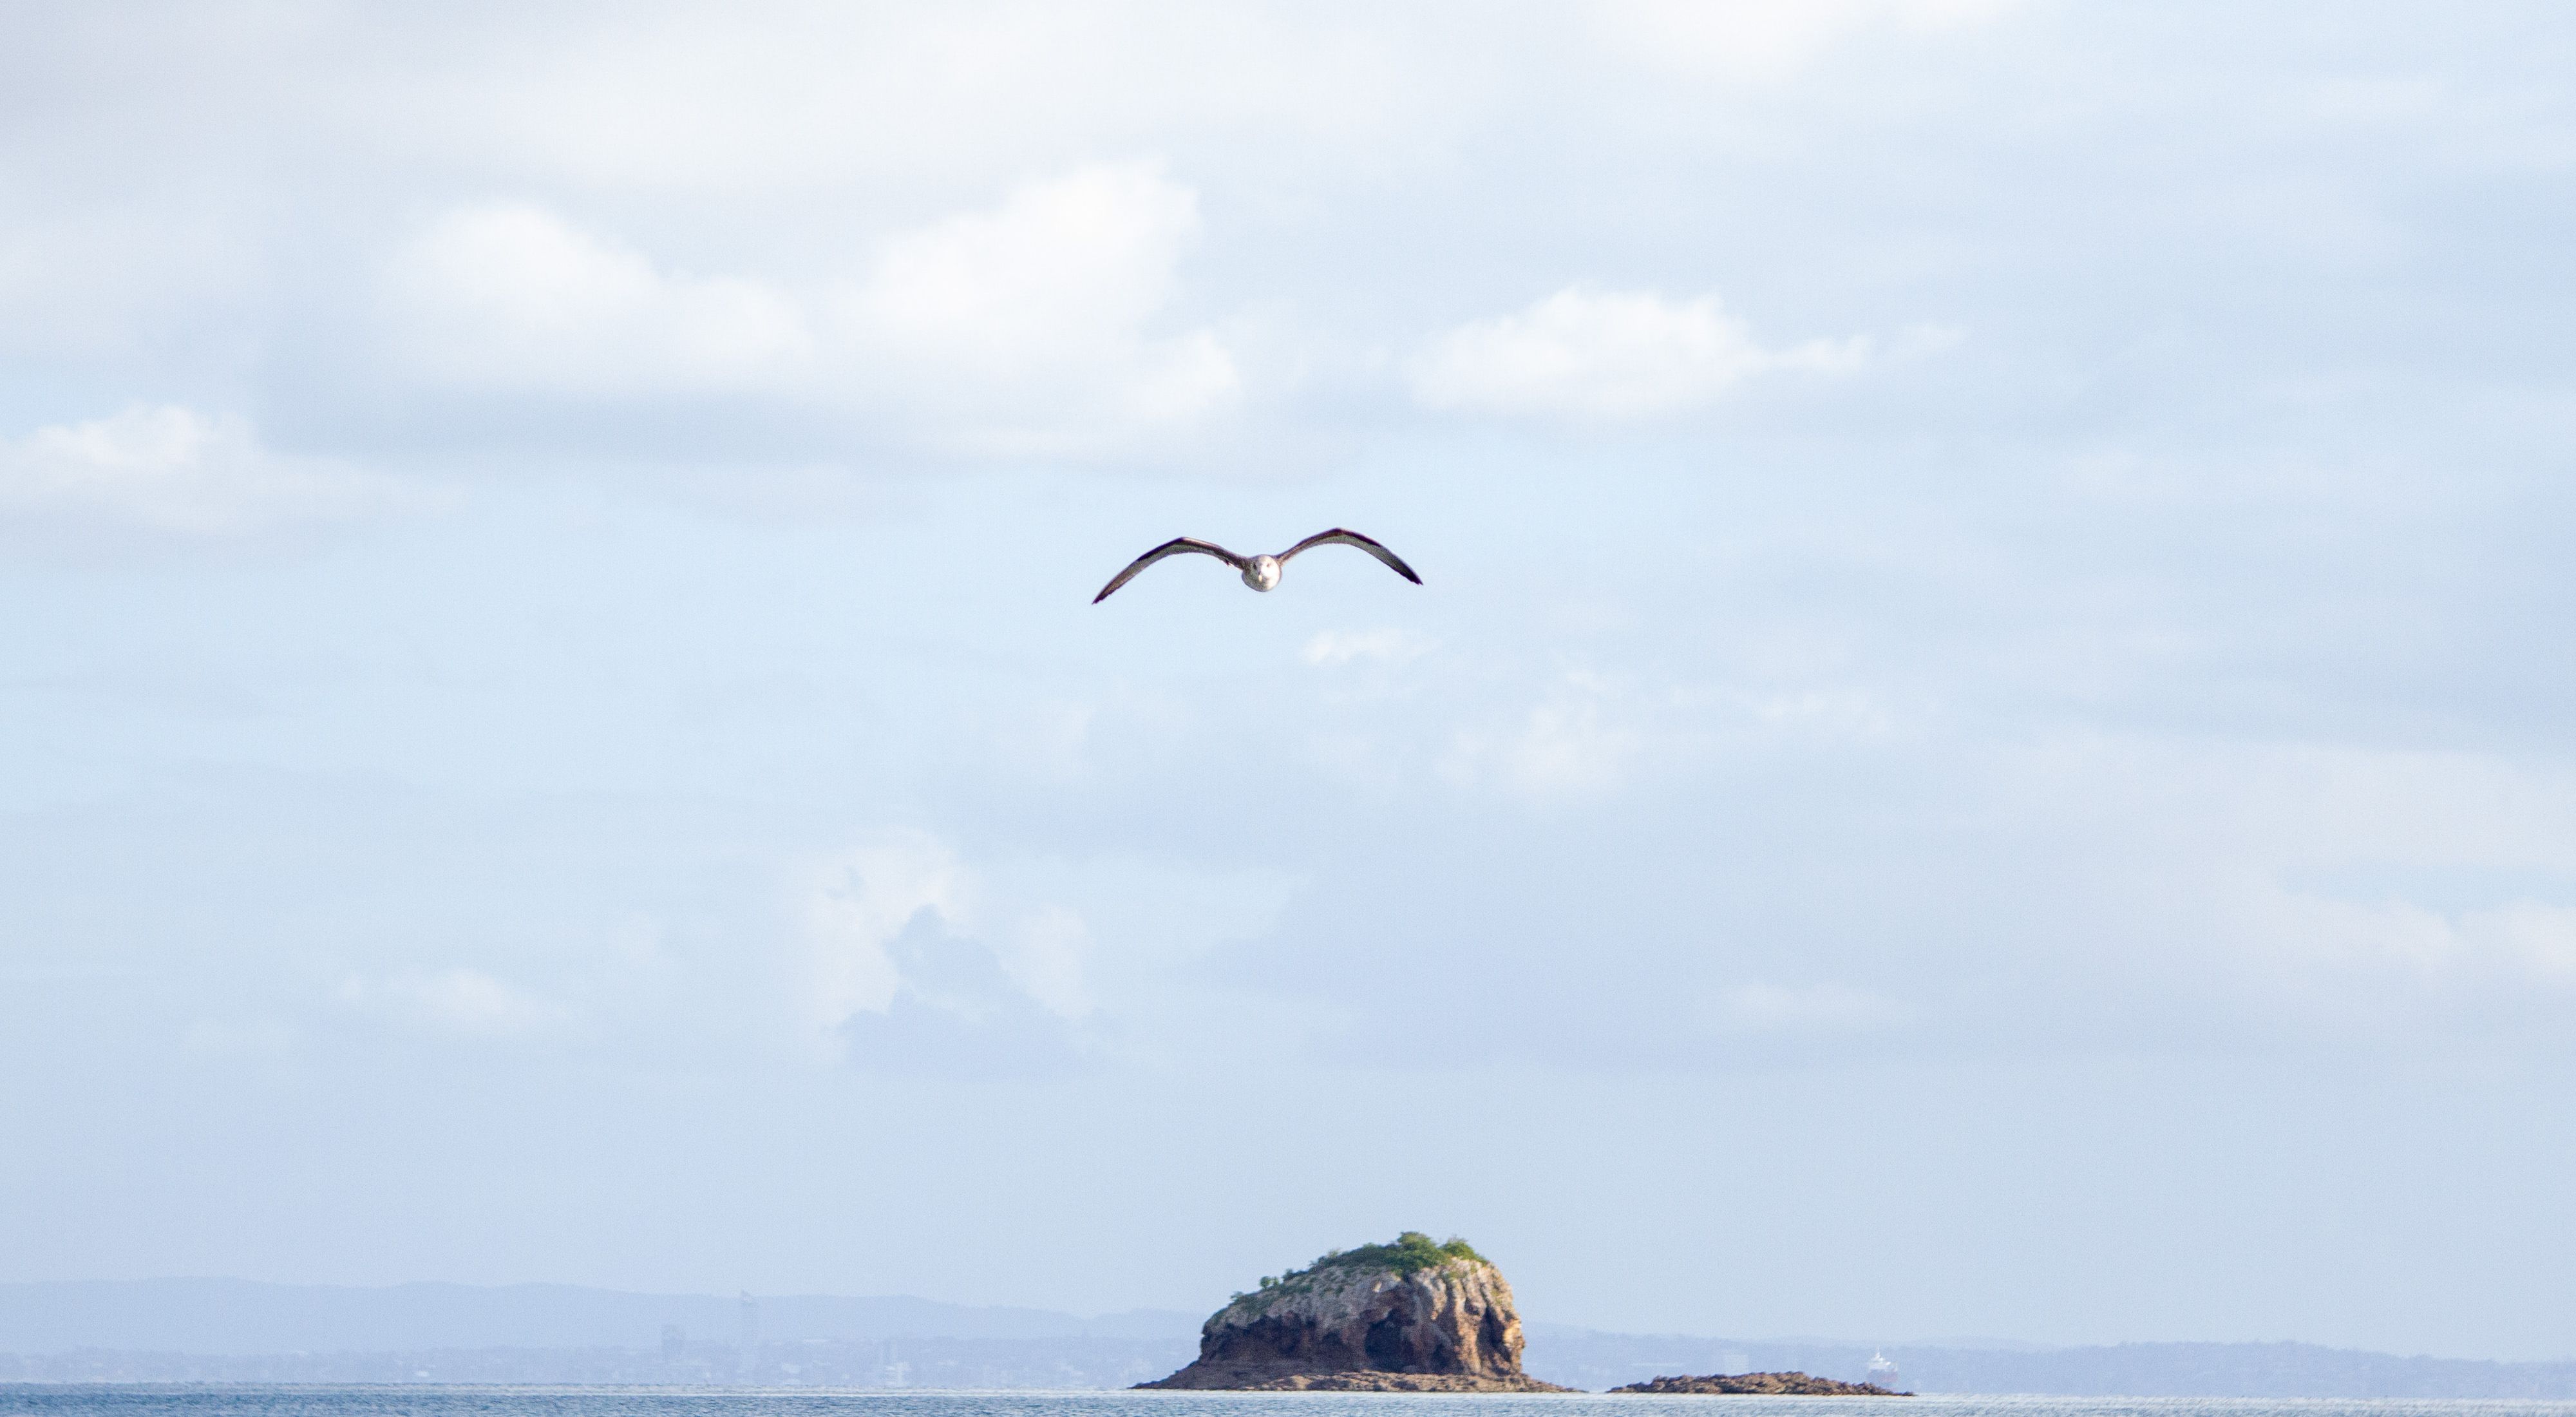 A seabird glides on air currents as it flies between islands in the Hauraki Guilf, Aotearoa New Zealand